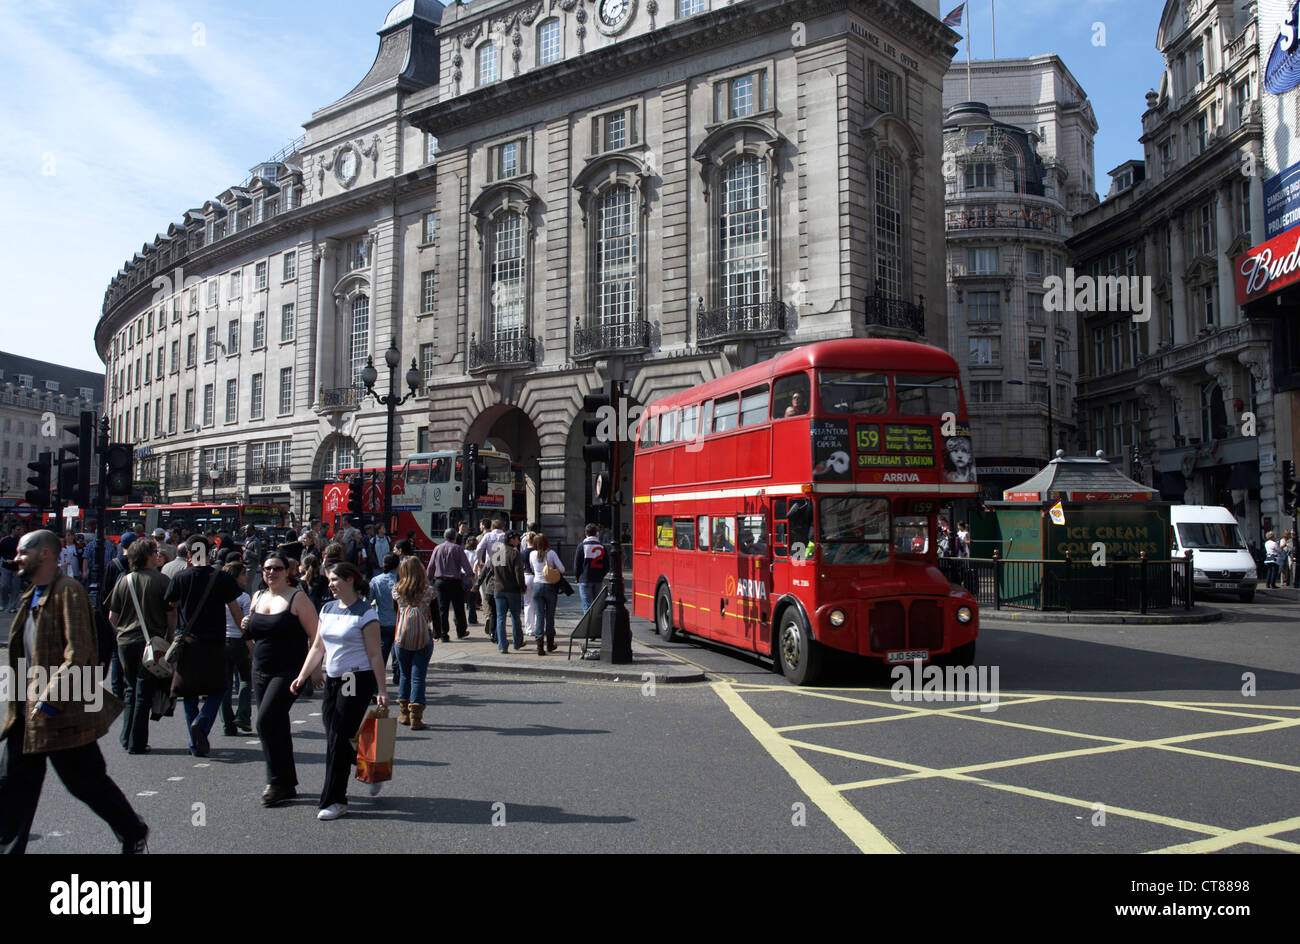 London - am Piccadilly Circus tummeln sich dort Stockfoto